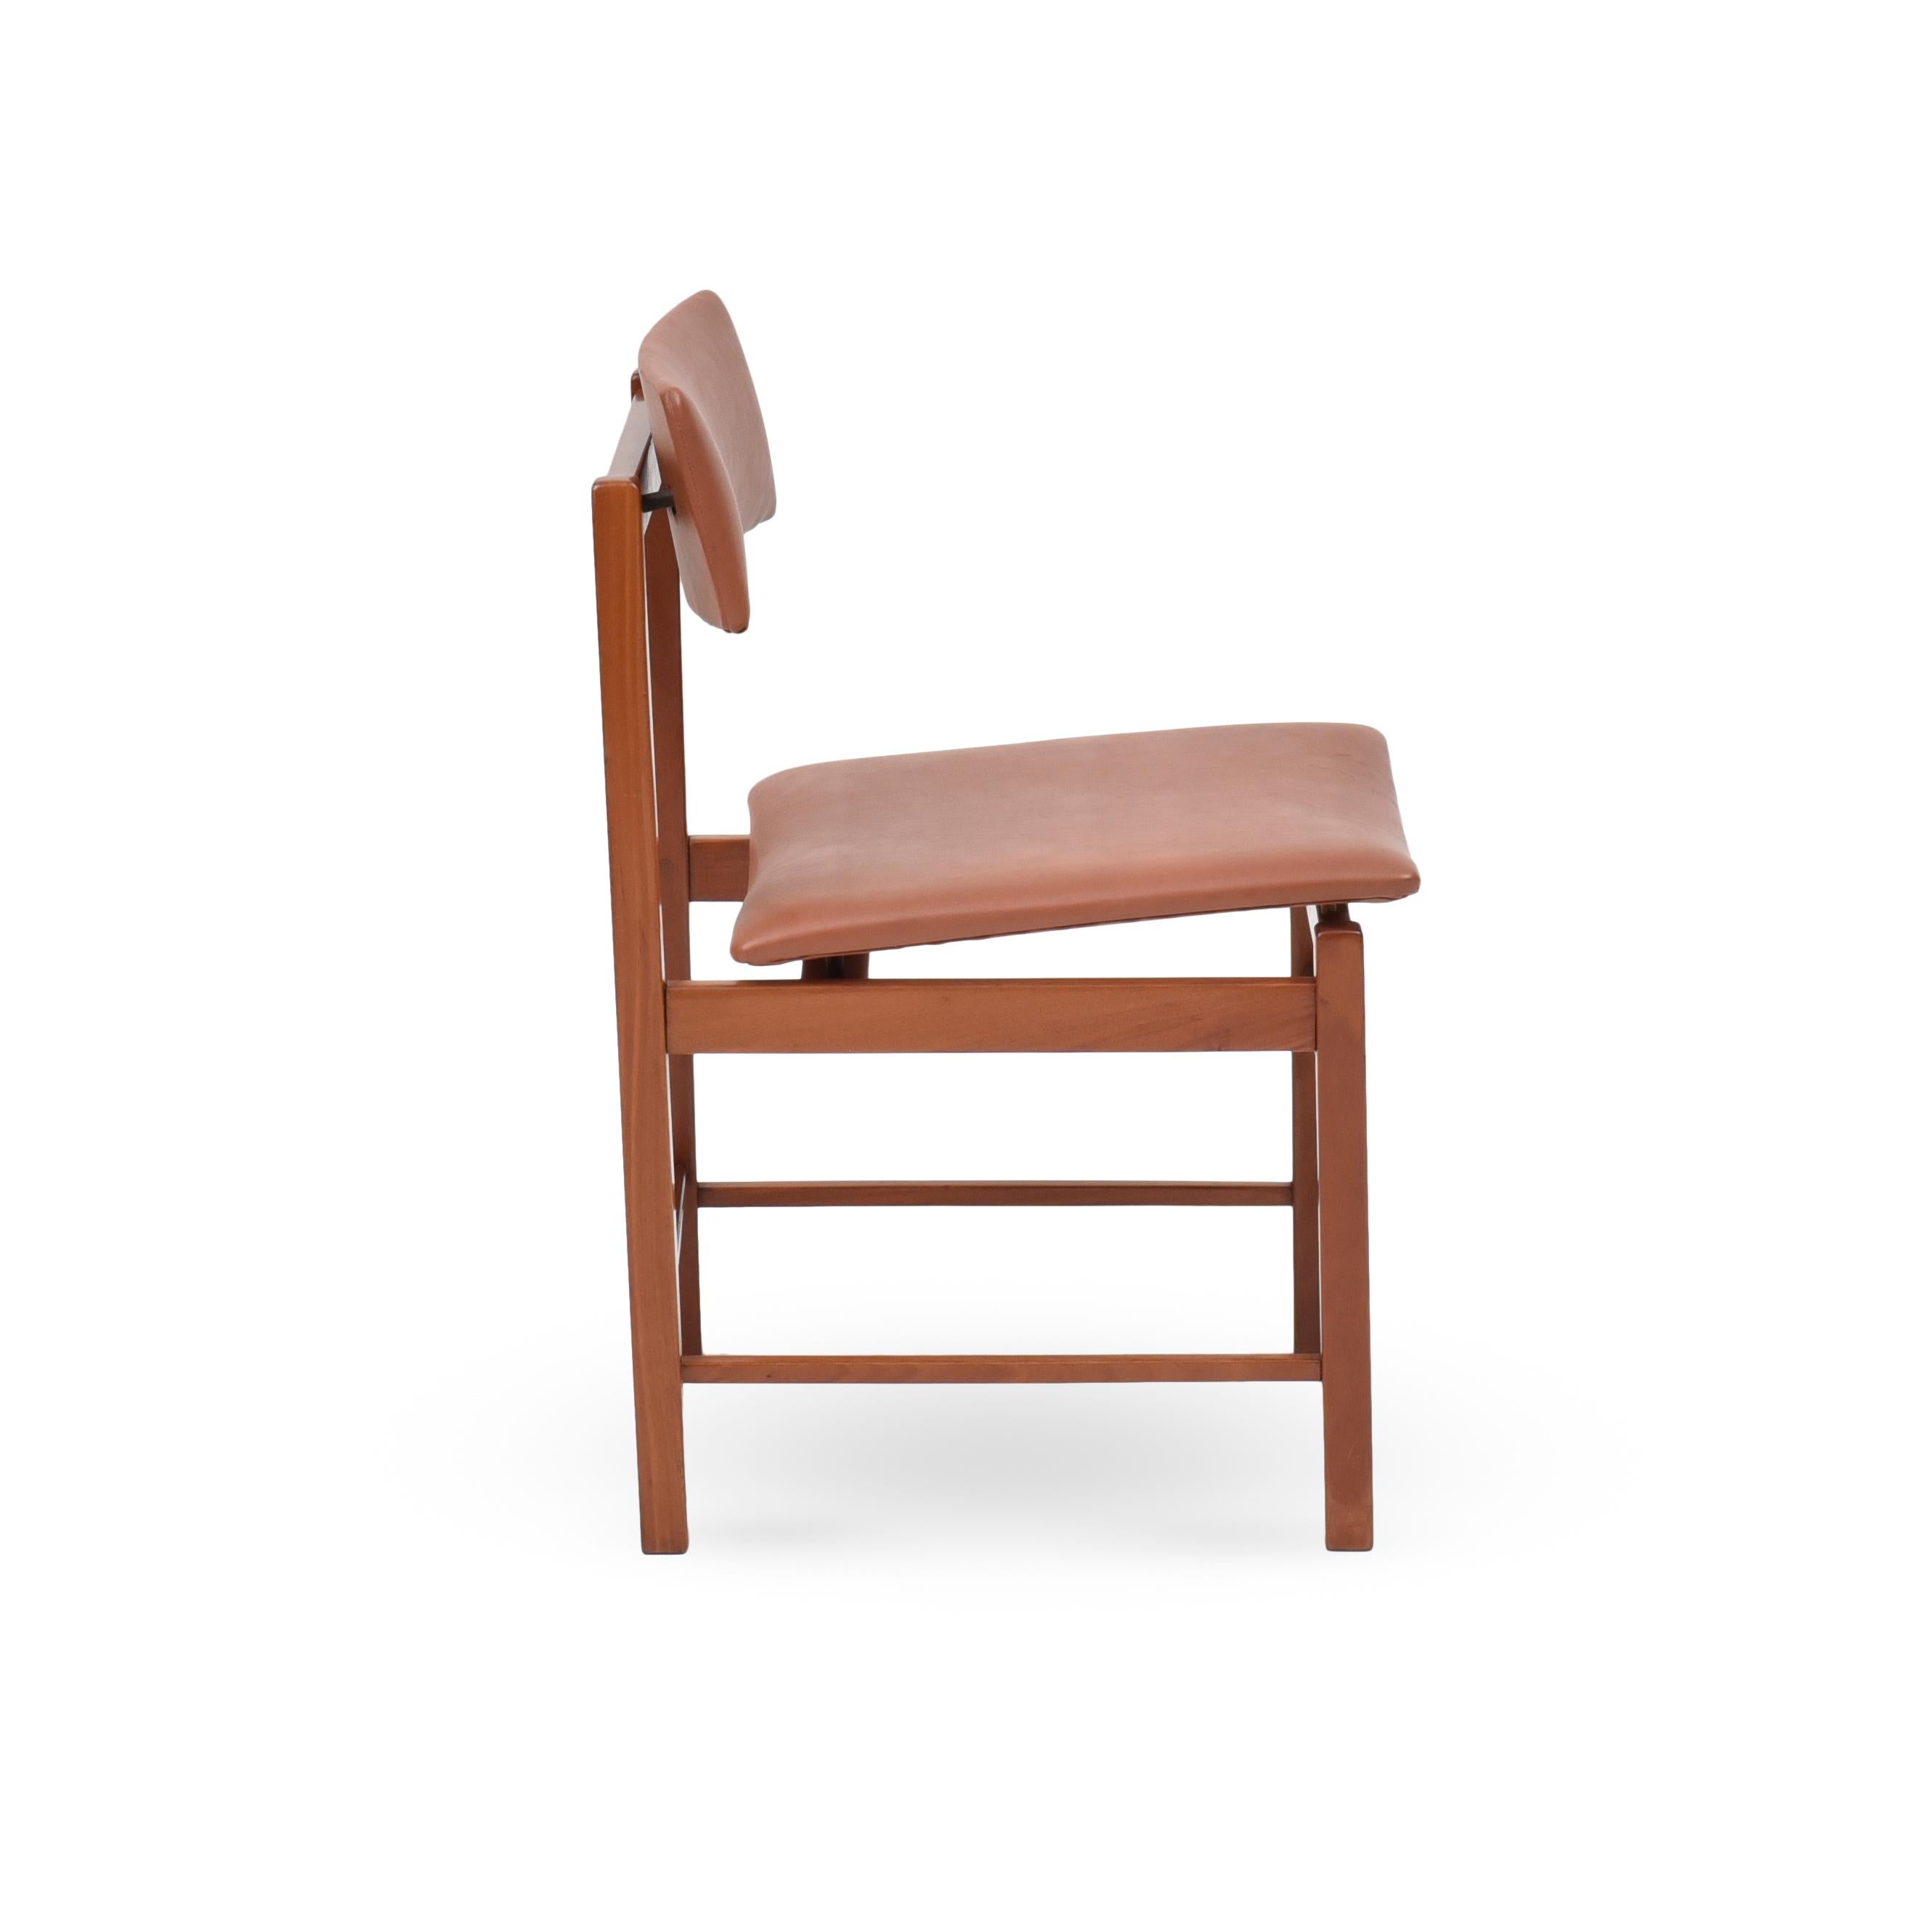 Pair of chairs in freijó designed by Mobilínea - Ernesto Hauner.